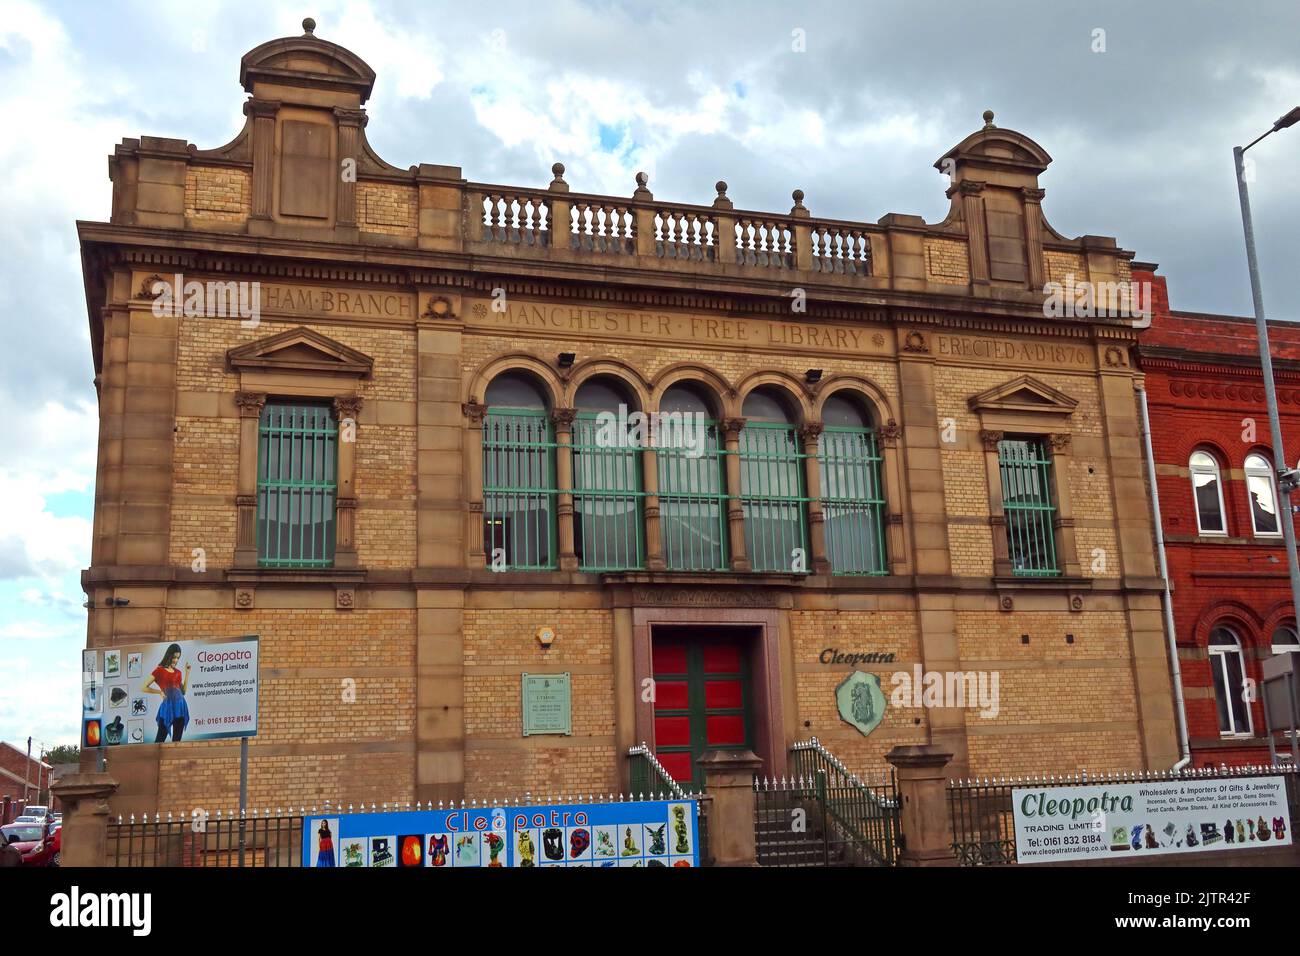 Cheetham Branch, Manchester, ehemalige Freie Bibliothek, erbaut 1876, jetzt Kleopatra Stockfoto